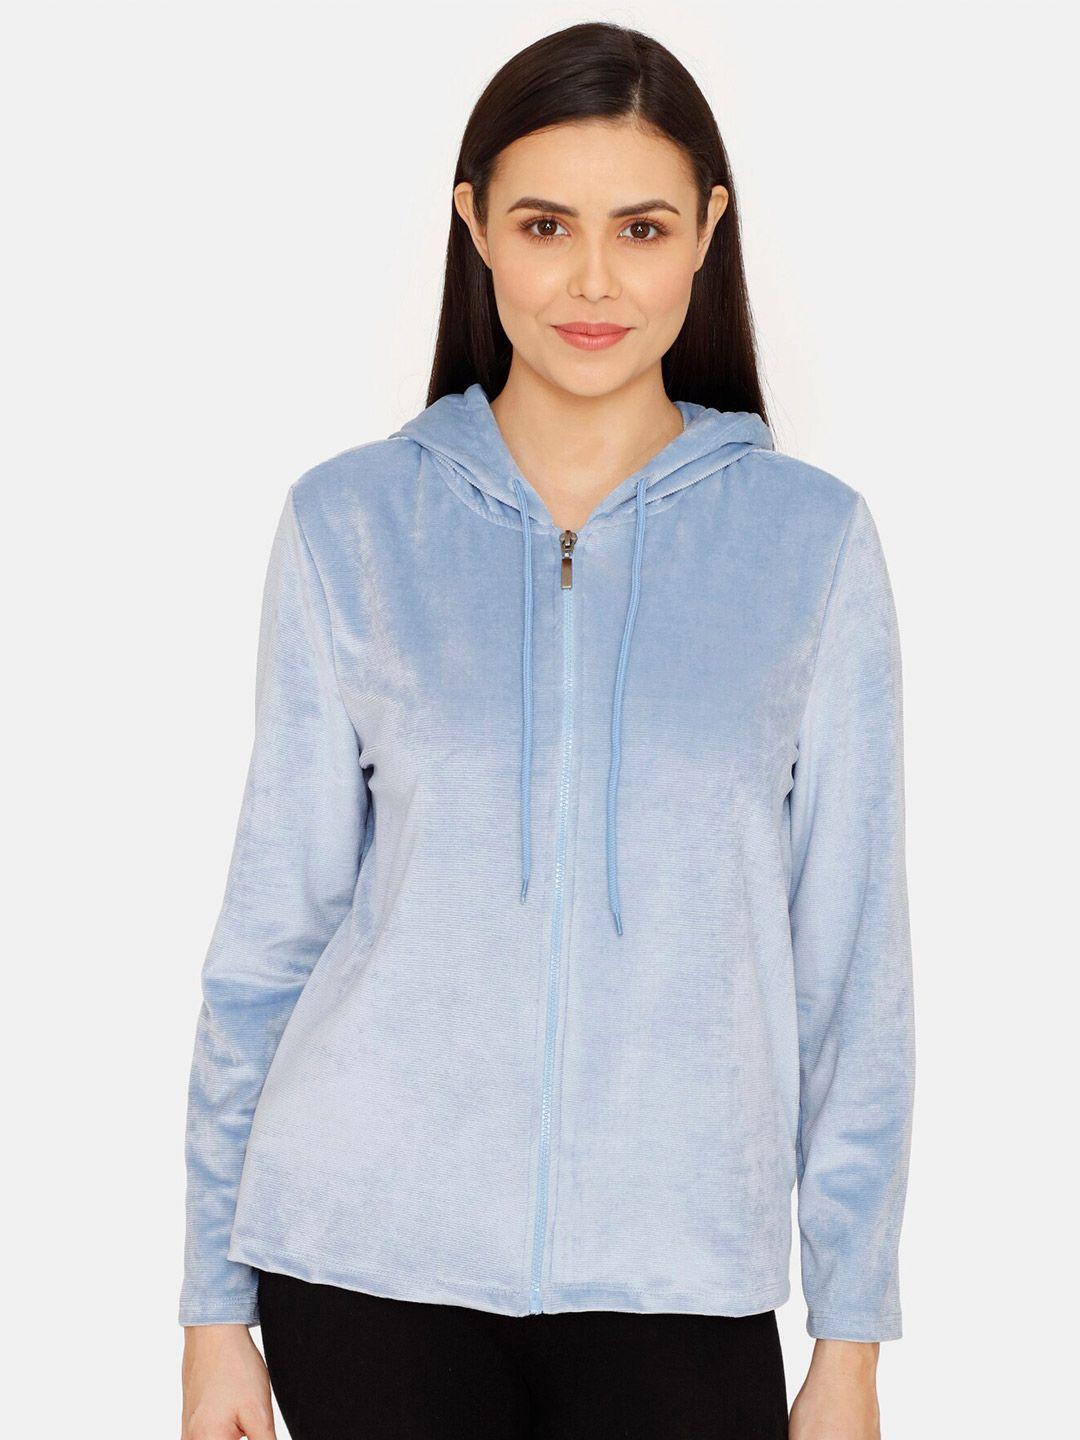 zivame-women-blue-hooded-sweatshirt